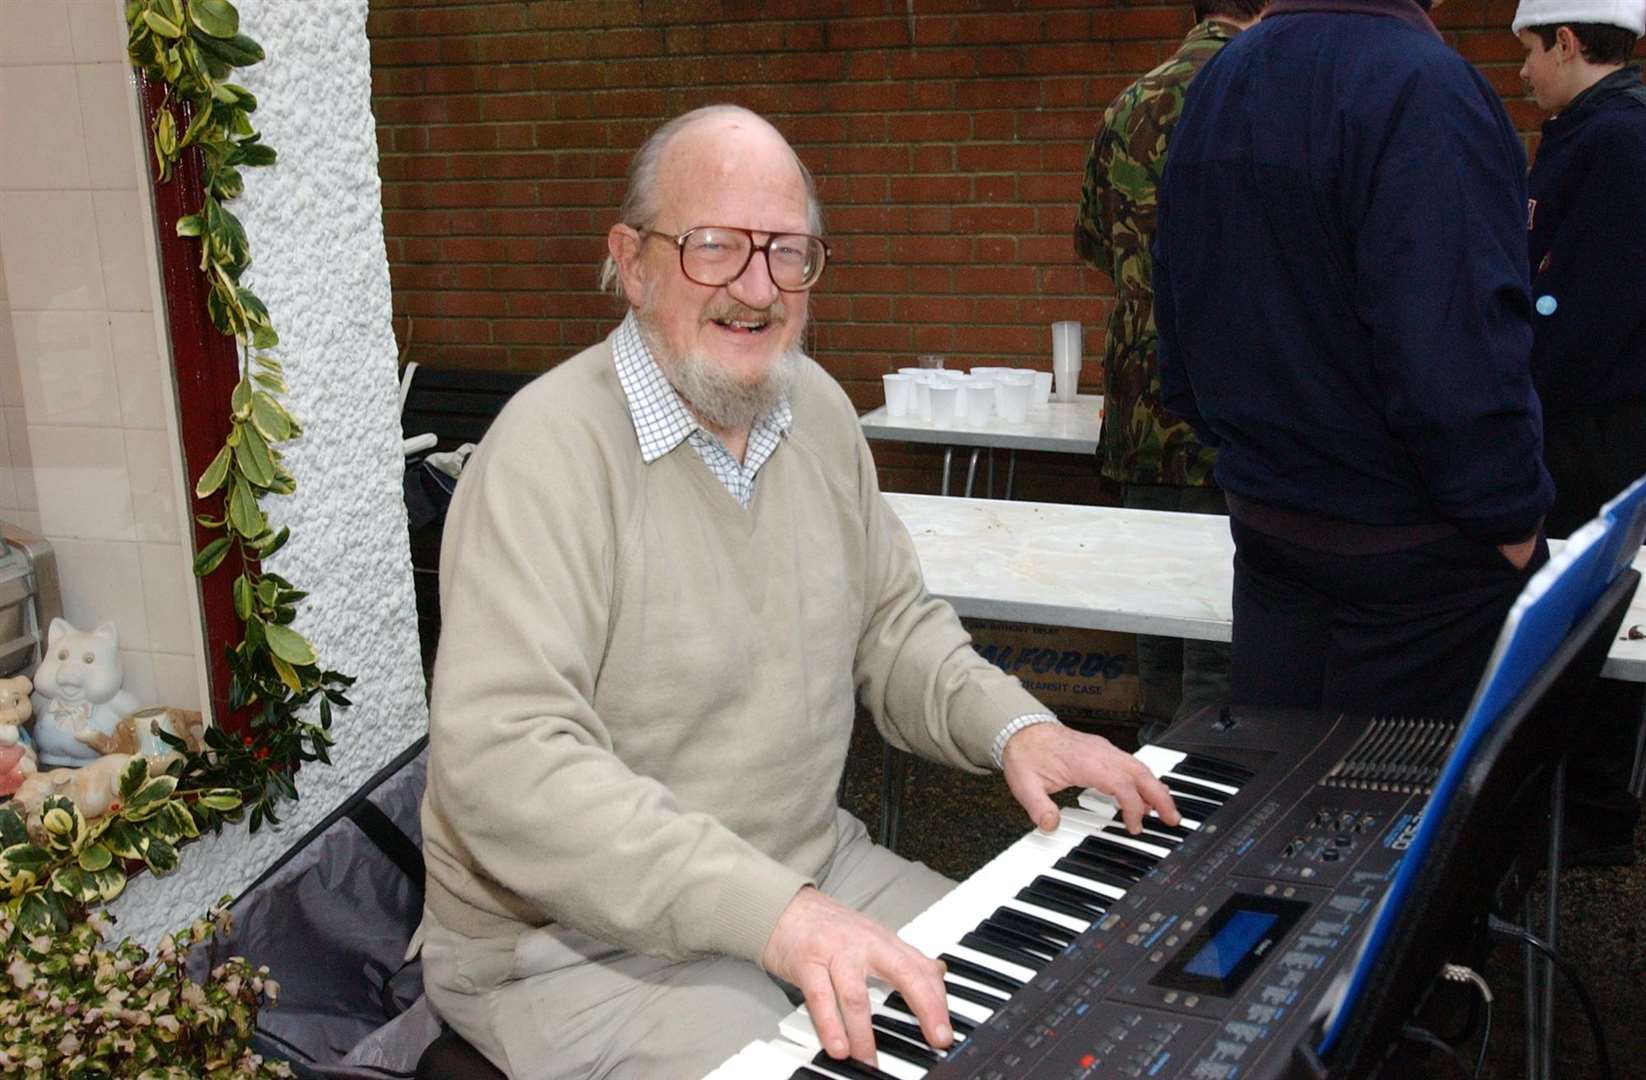 Church organist David Harding had recently been diagnosed with leukaemia